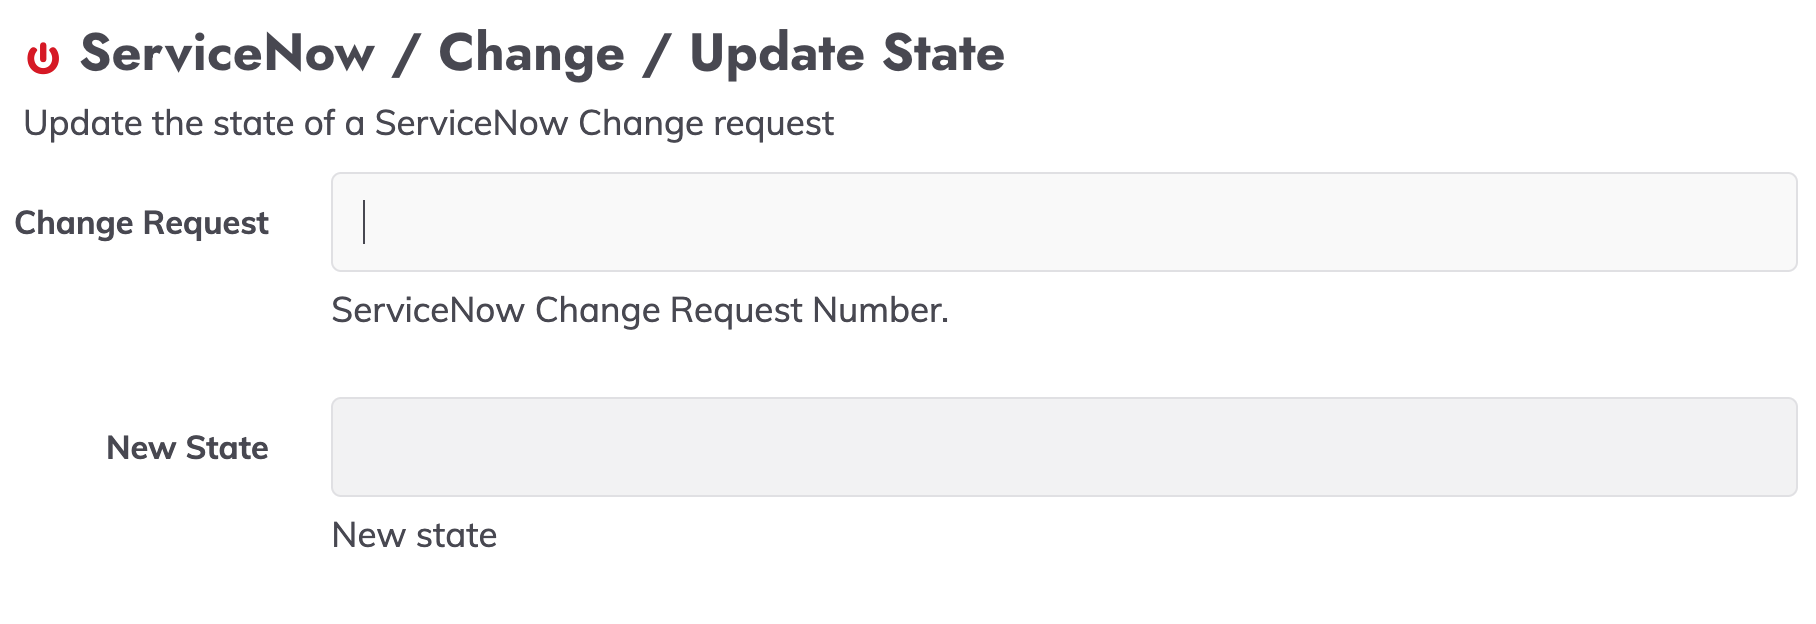 ServiceNow / Change / Update State